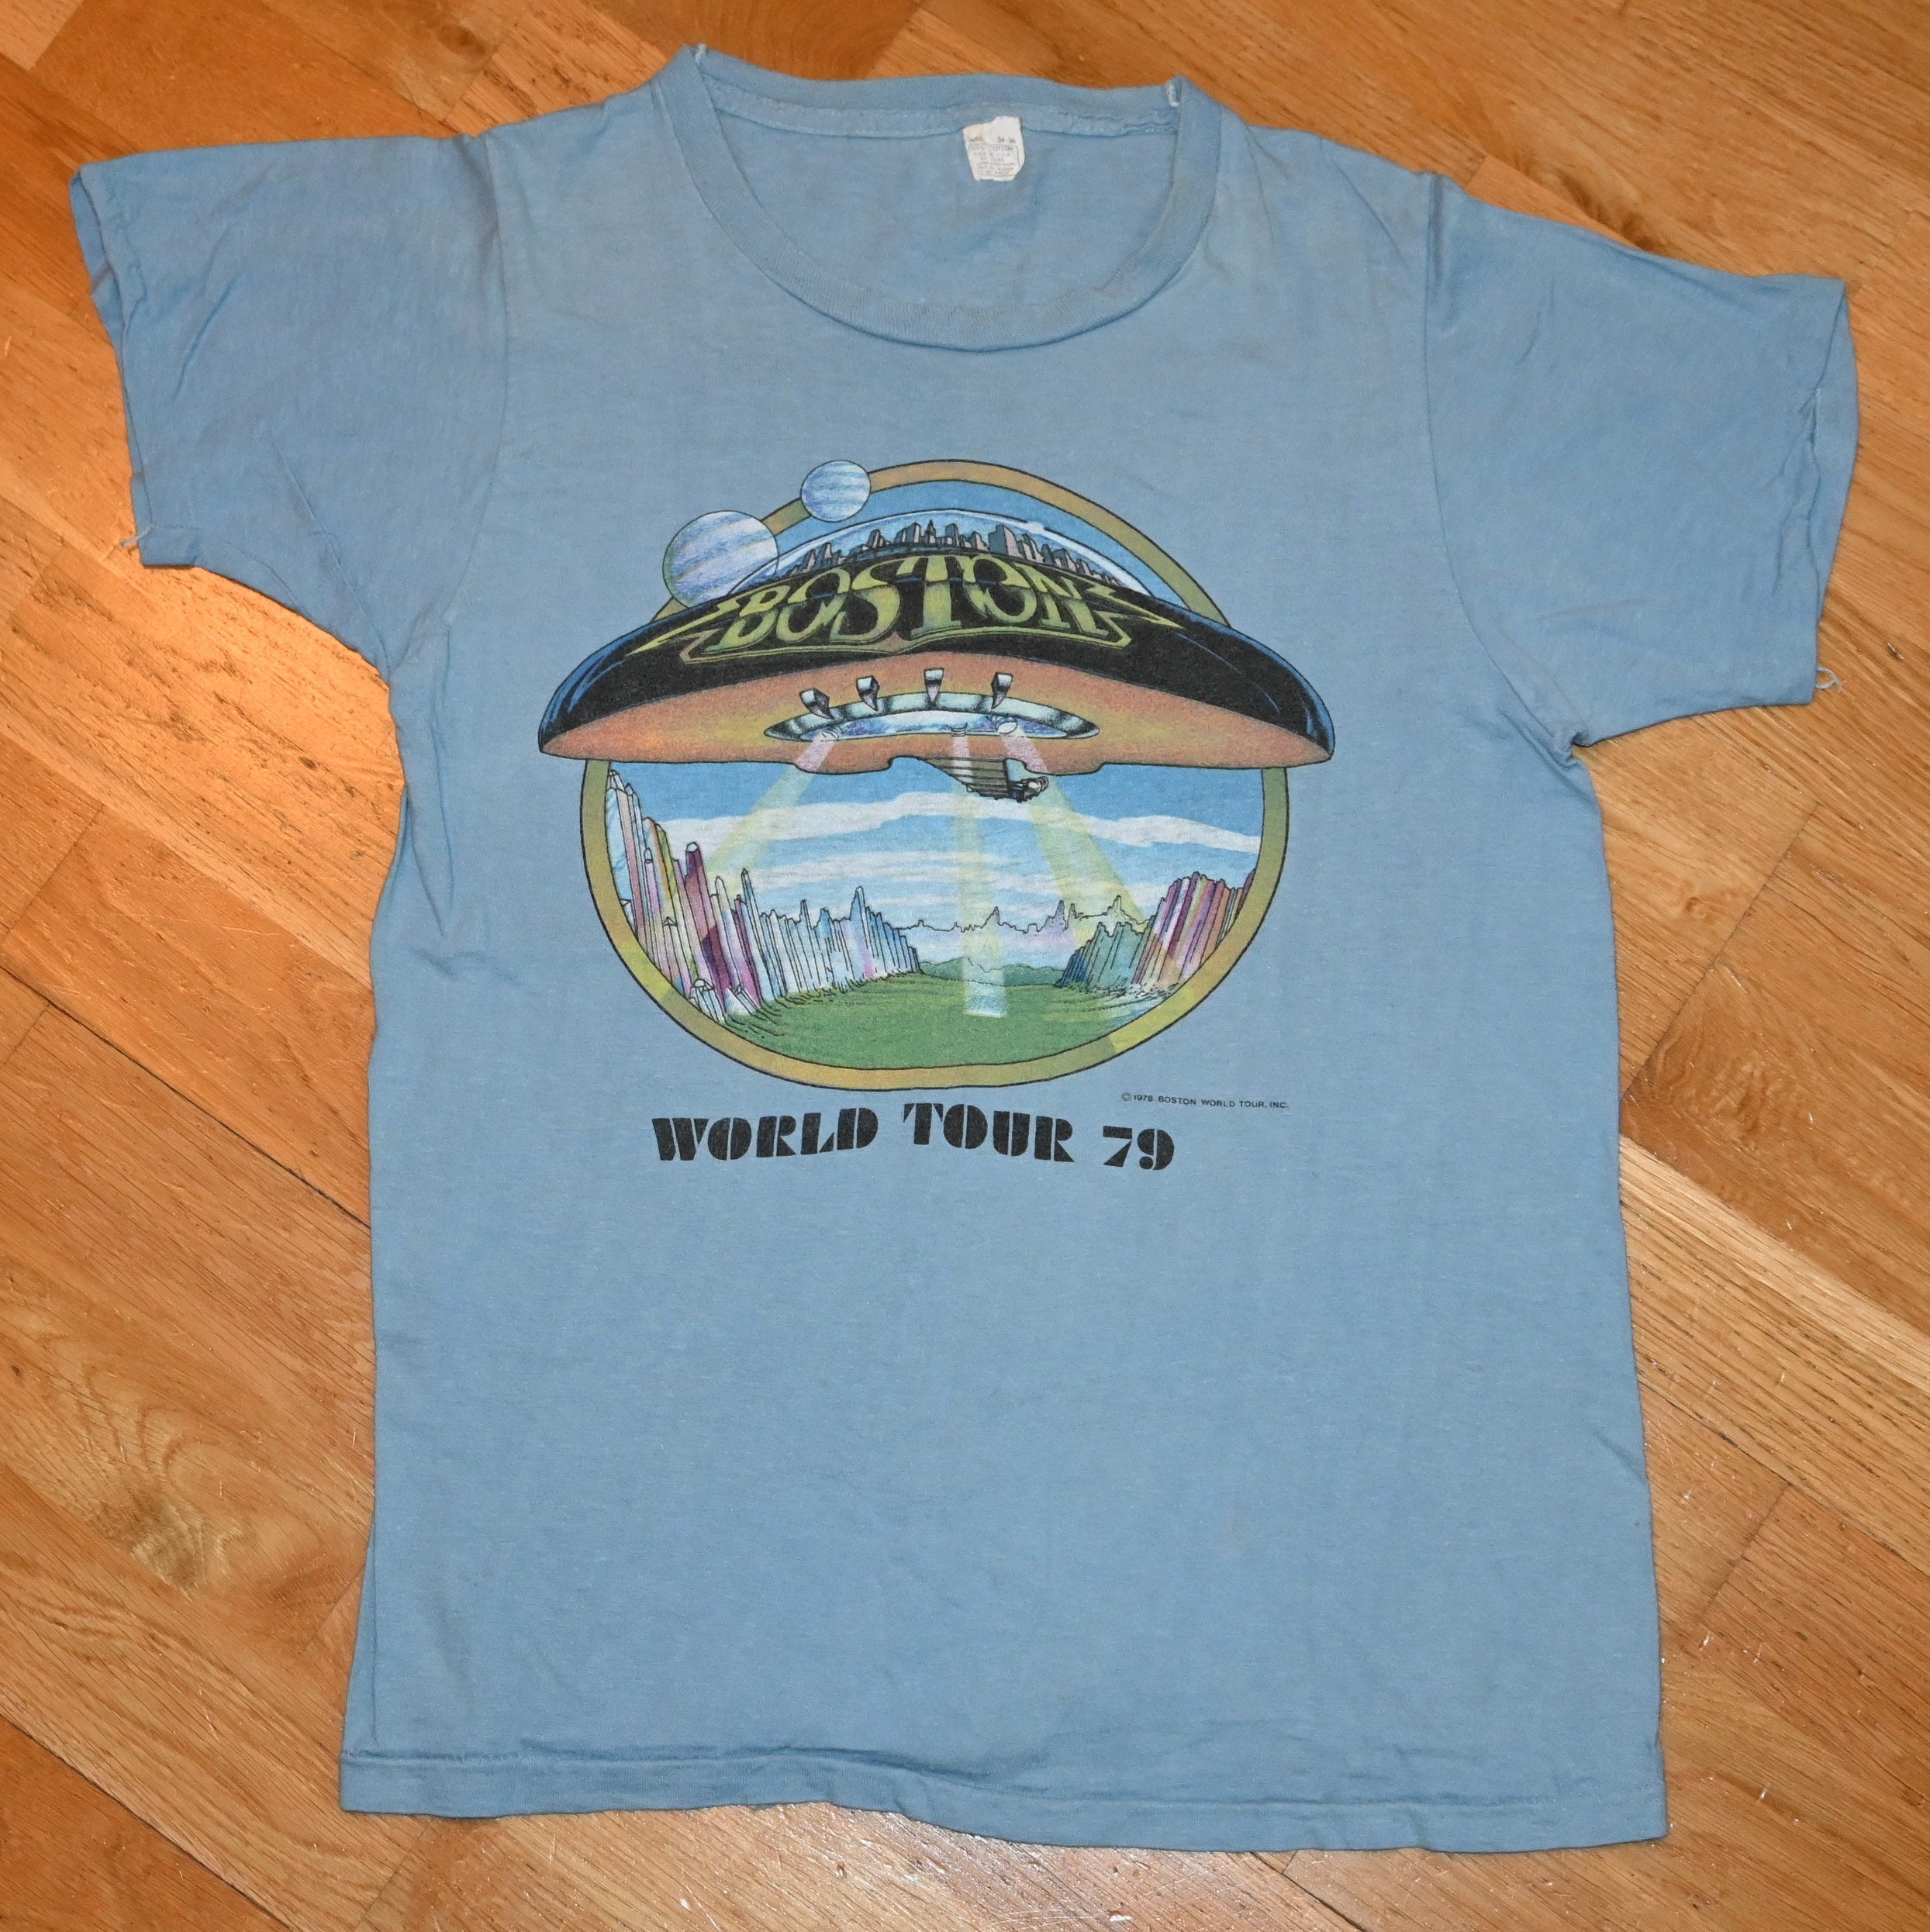 artwork boston band Essential T-Shirt for Sale by wtomaszewski8g